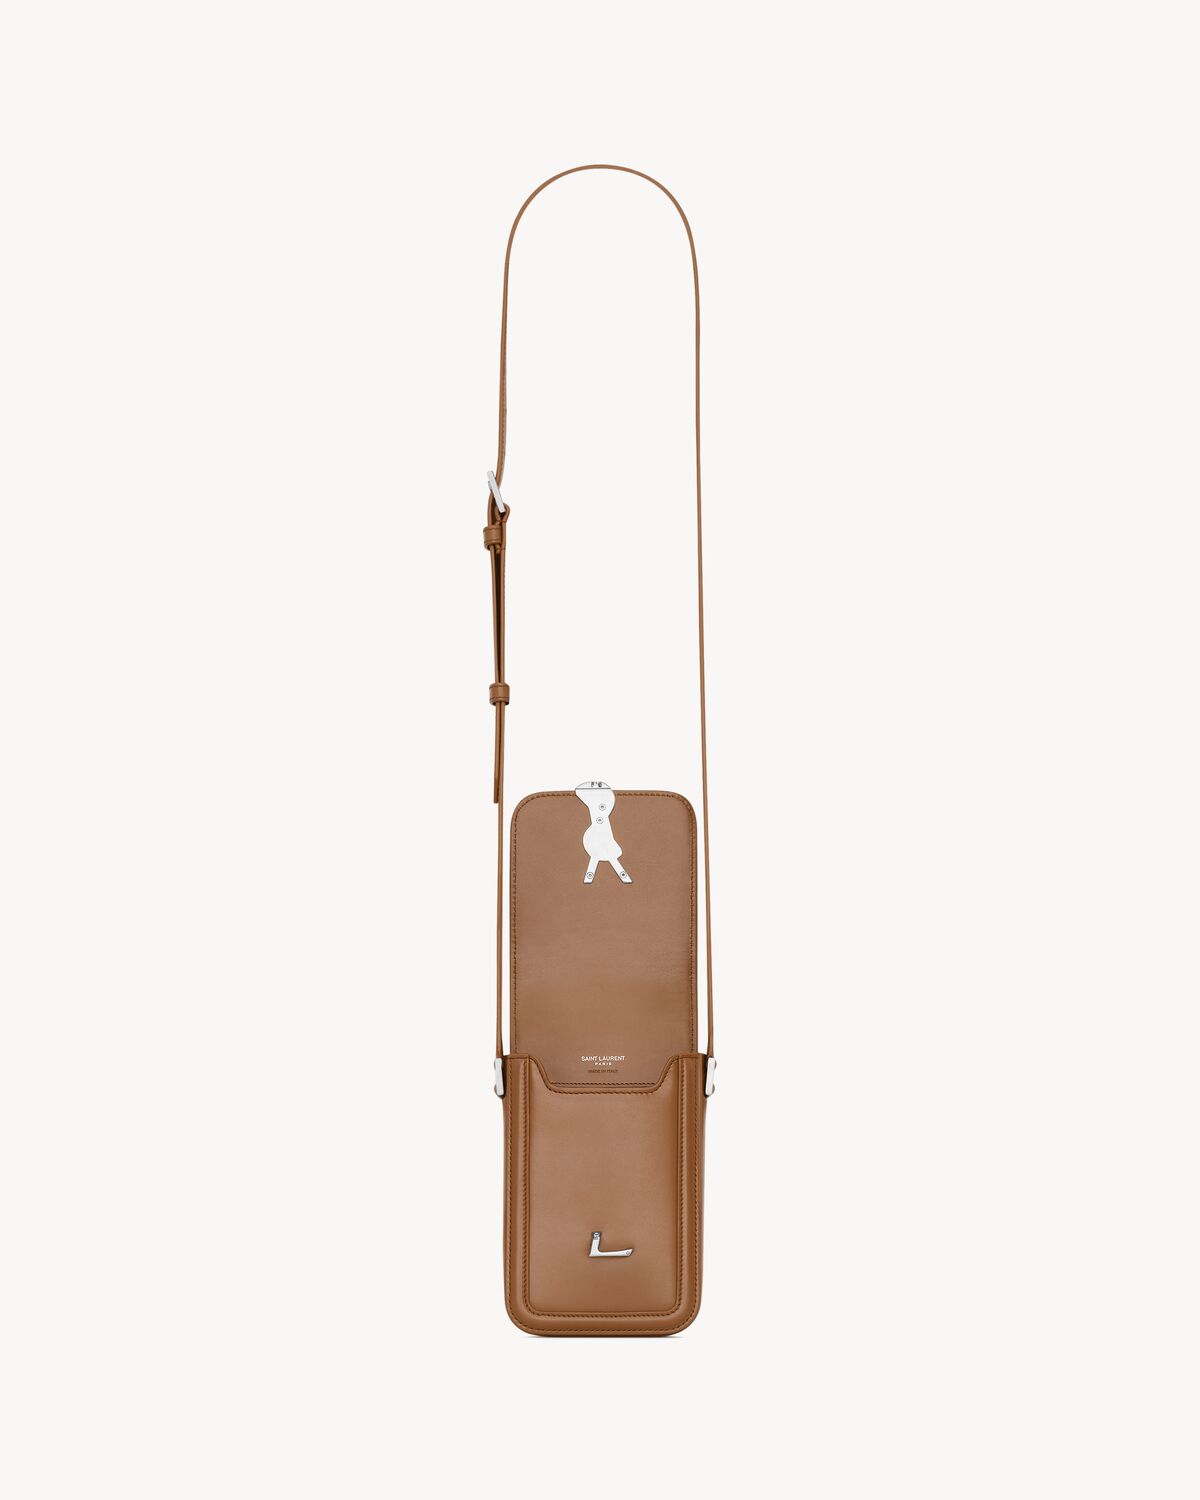 SOLFERINO mini bag in smooth leather